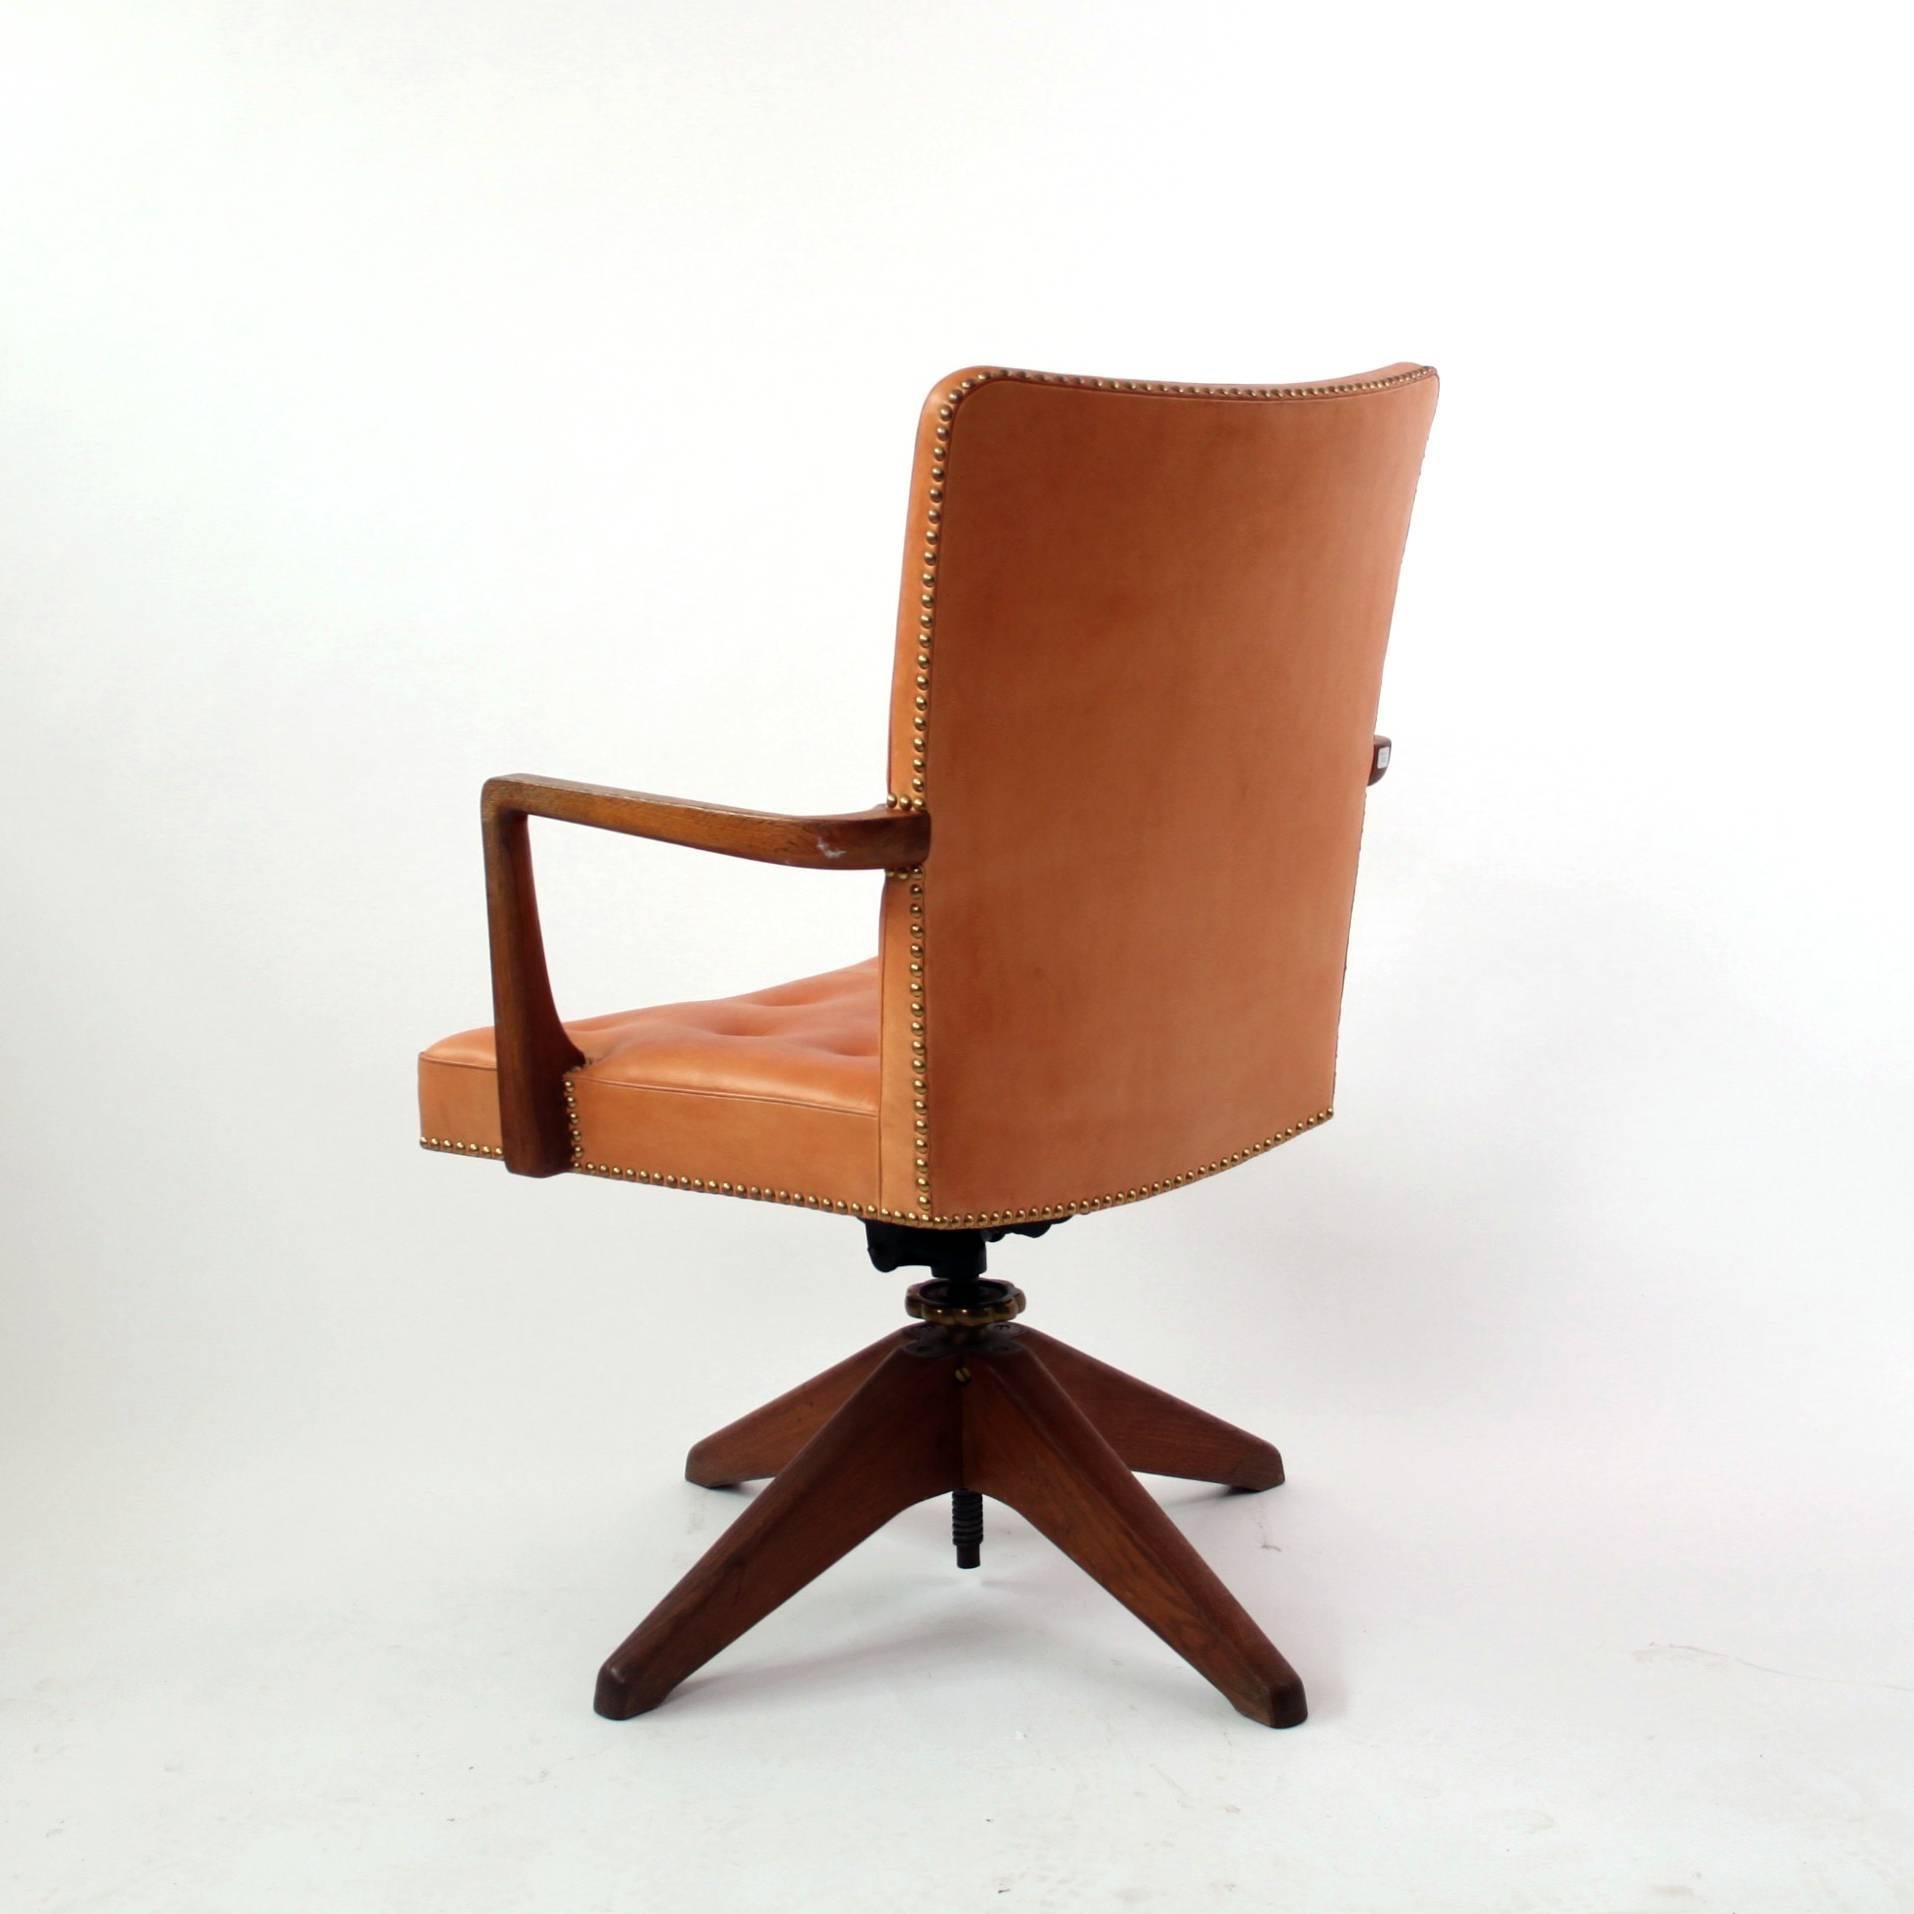 Scandinavian Modern Palle Suenson, Rare Executive Desk Chair in Walnut, Brass and Leather, 1940s